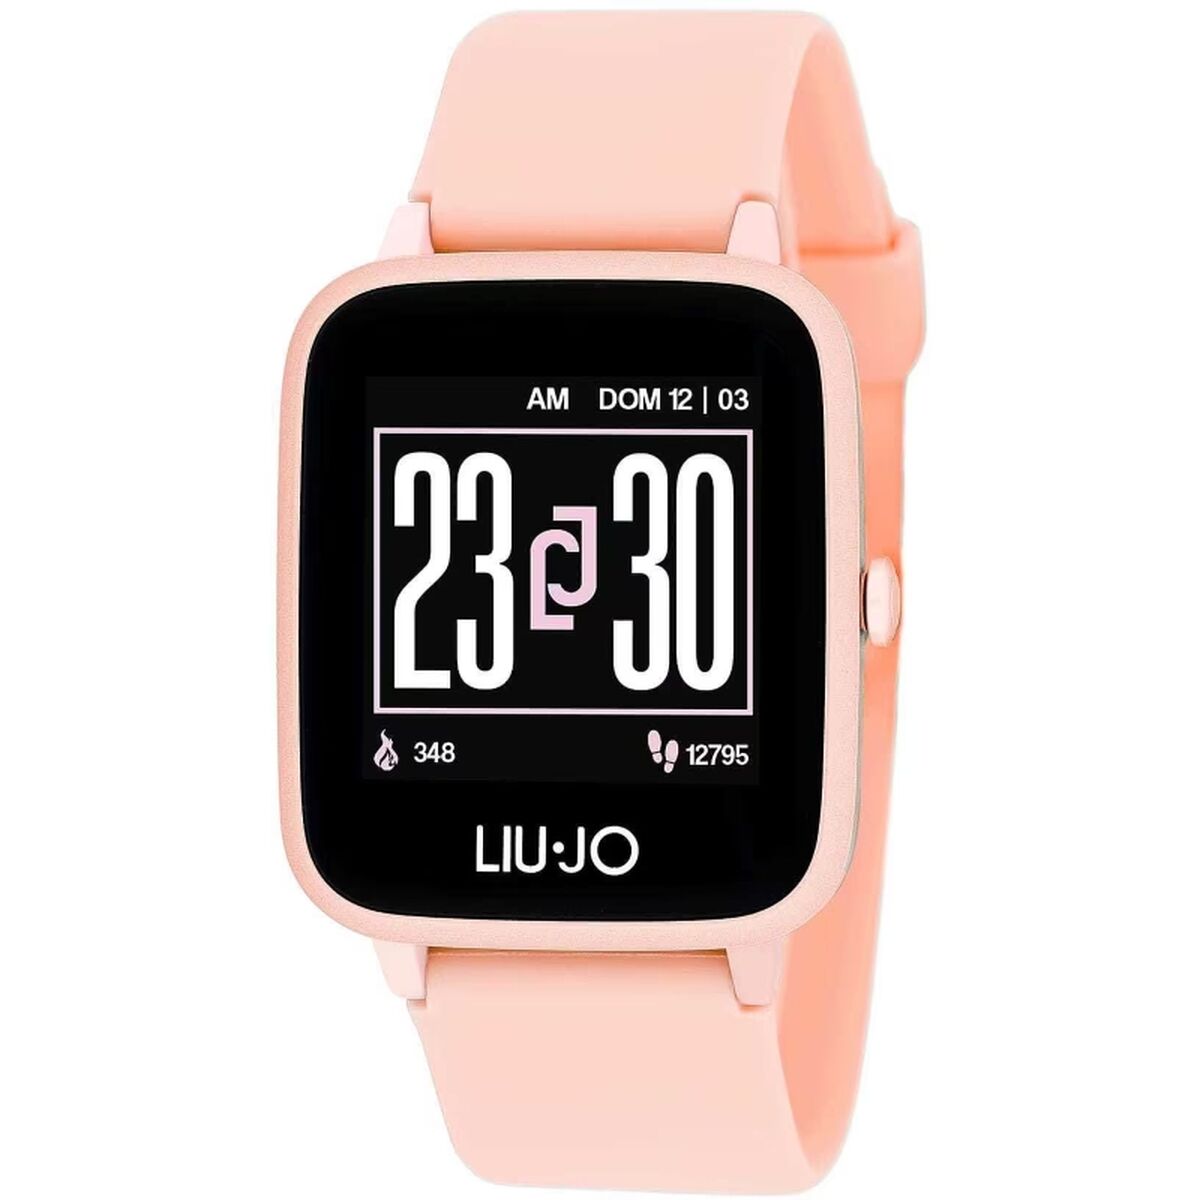 Kaufe Smartwatch LIU JO SWLJ047 bei AWK Flagship um € 167.00